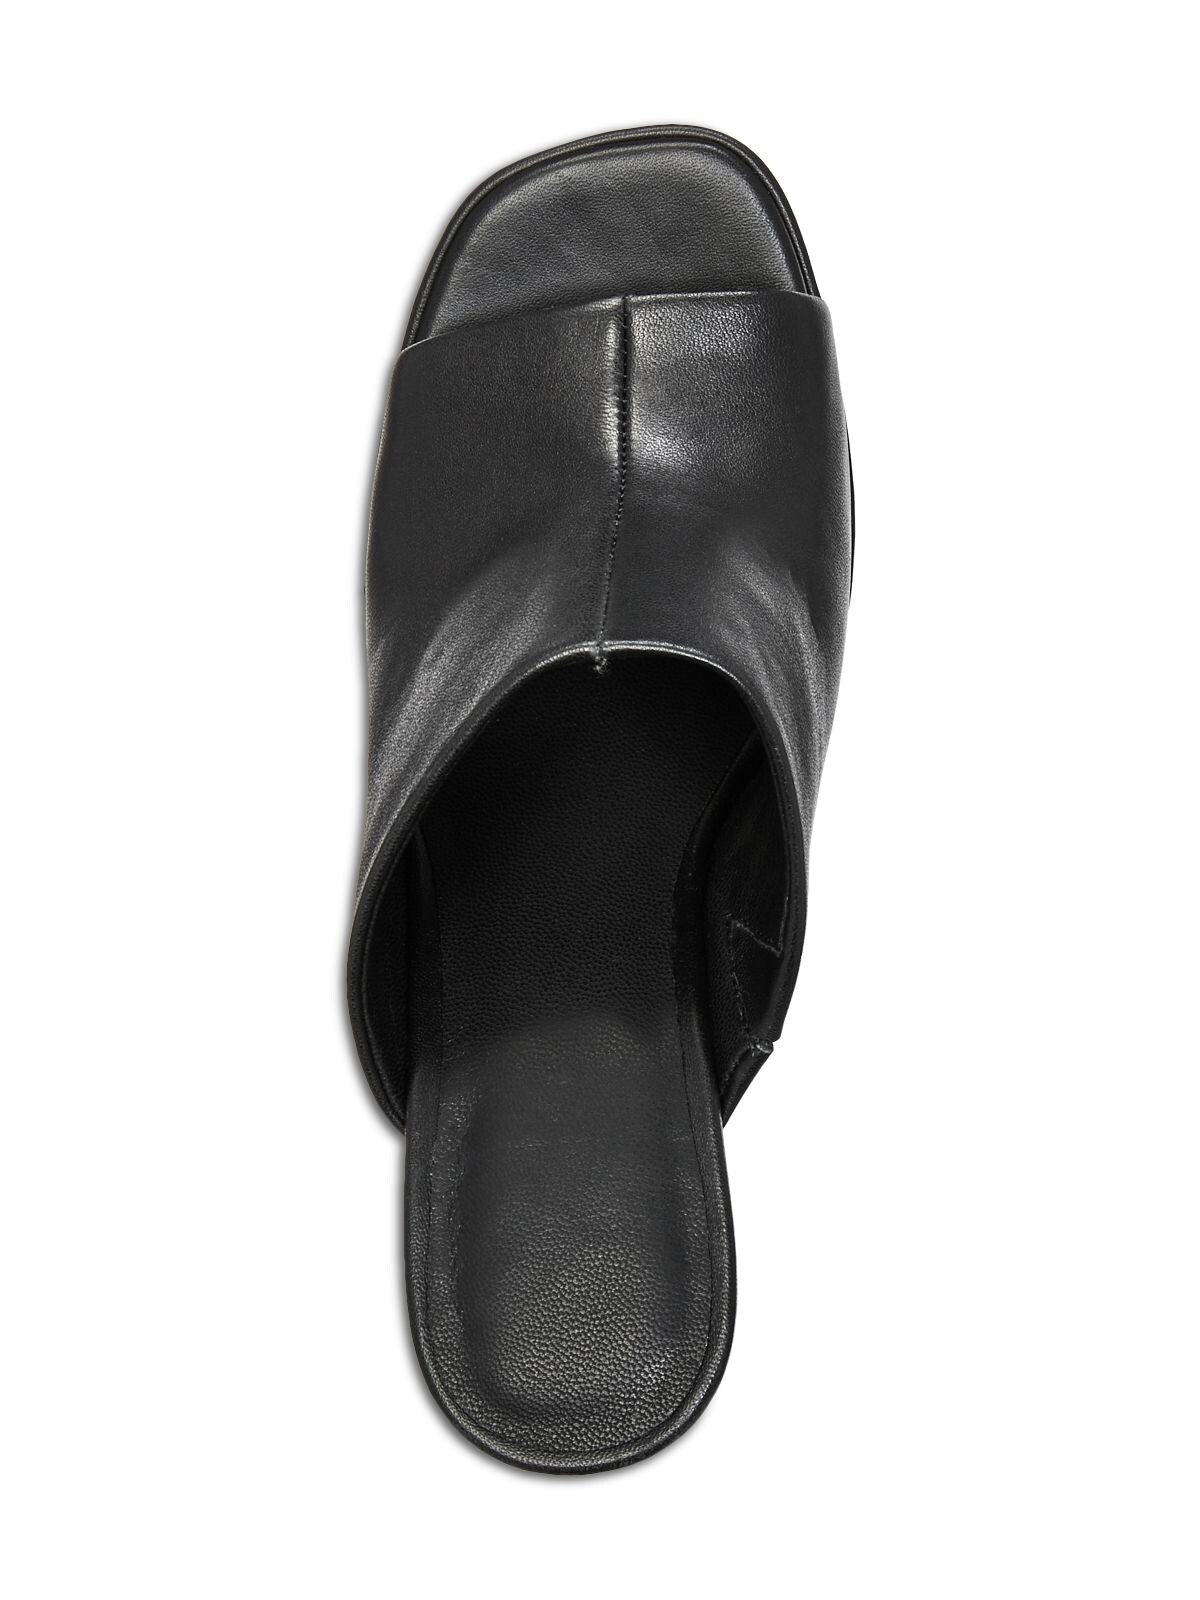 AQUA Womens Black Goring Padded Dani Square Toe Sculpted Heel Slip On Leather Heeled Sandal 7.5 M